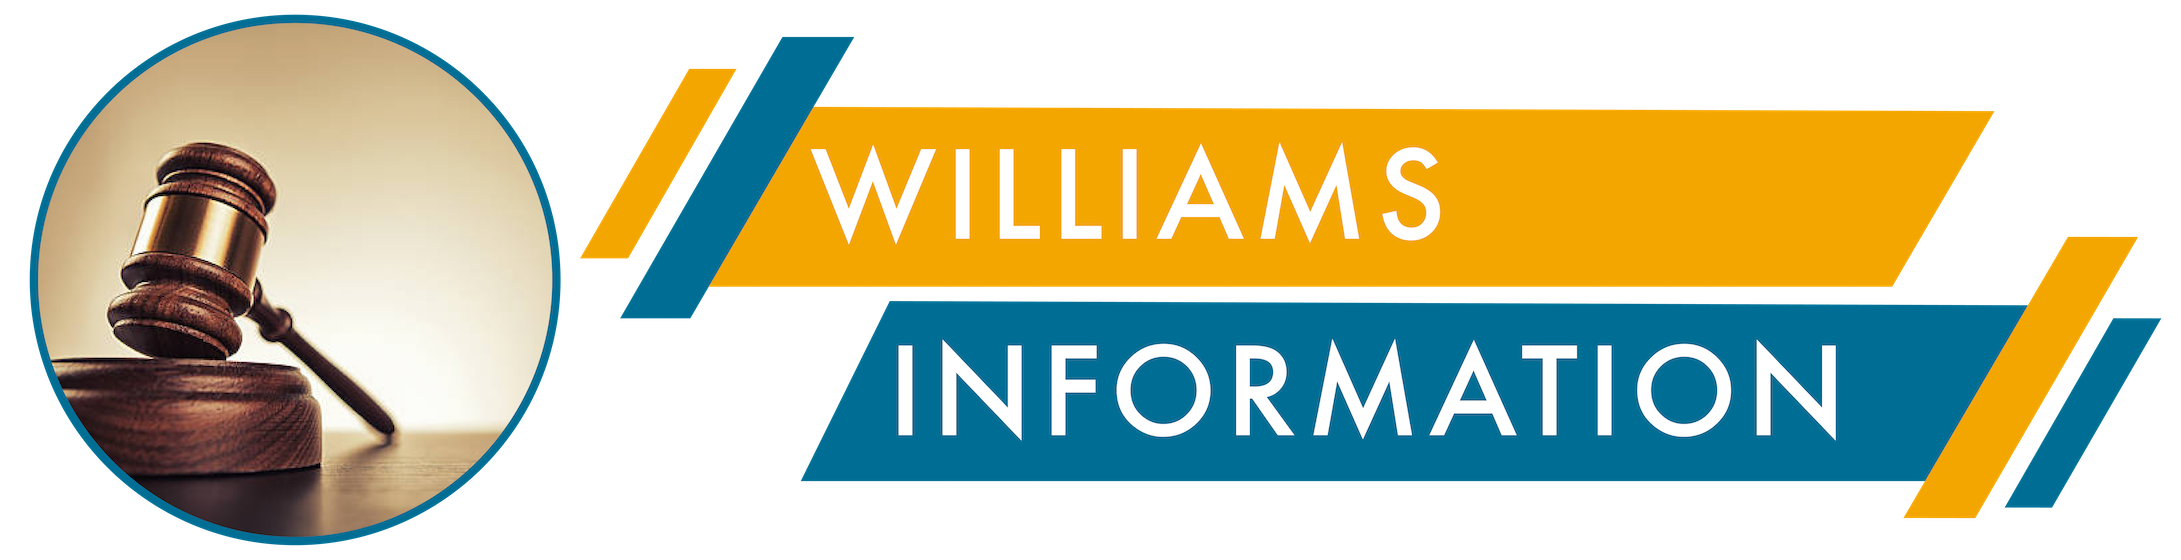 Williams Information Banner